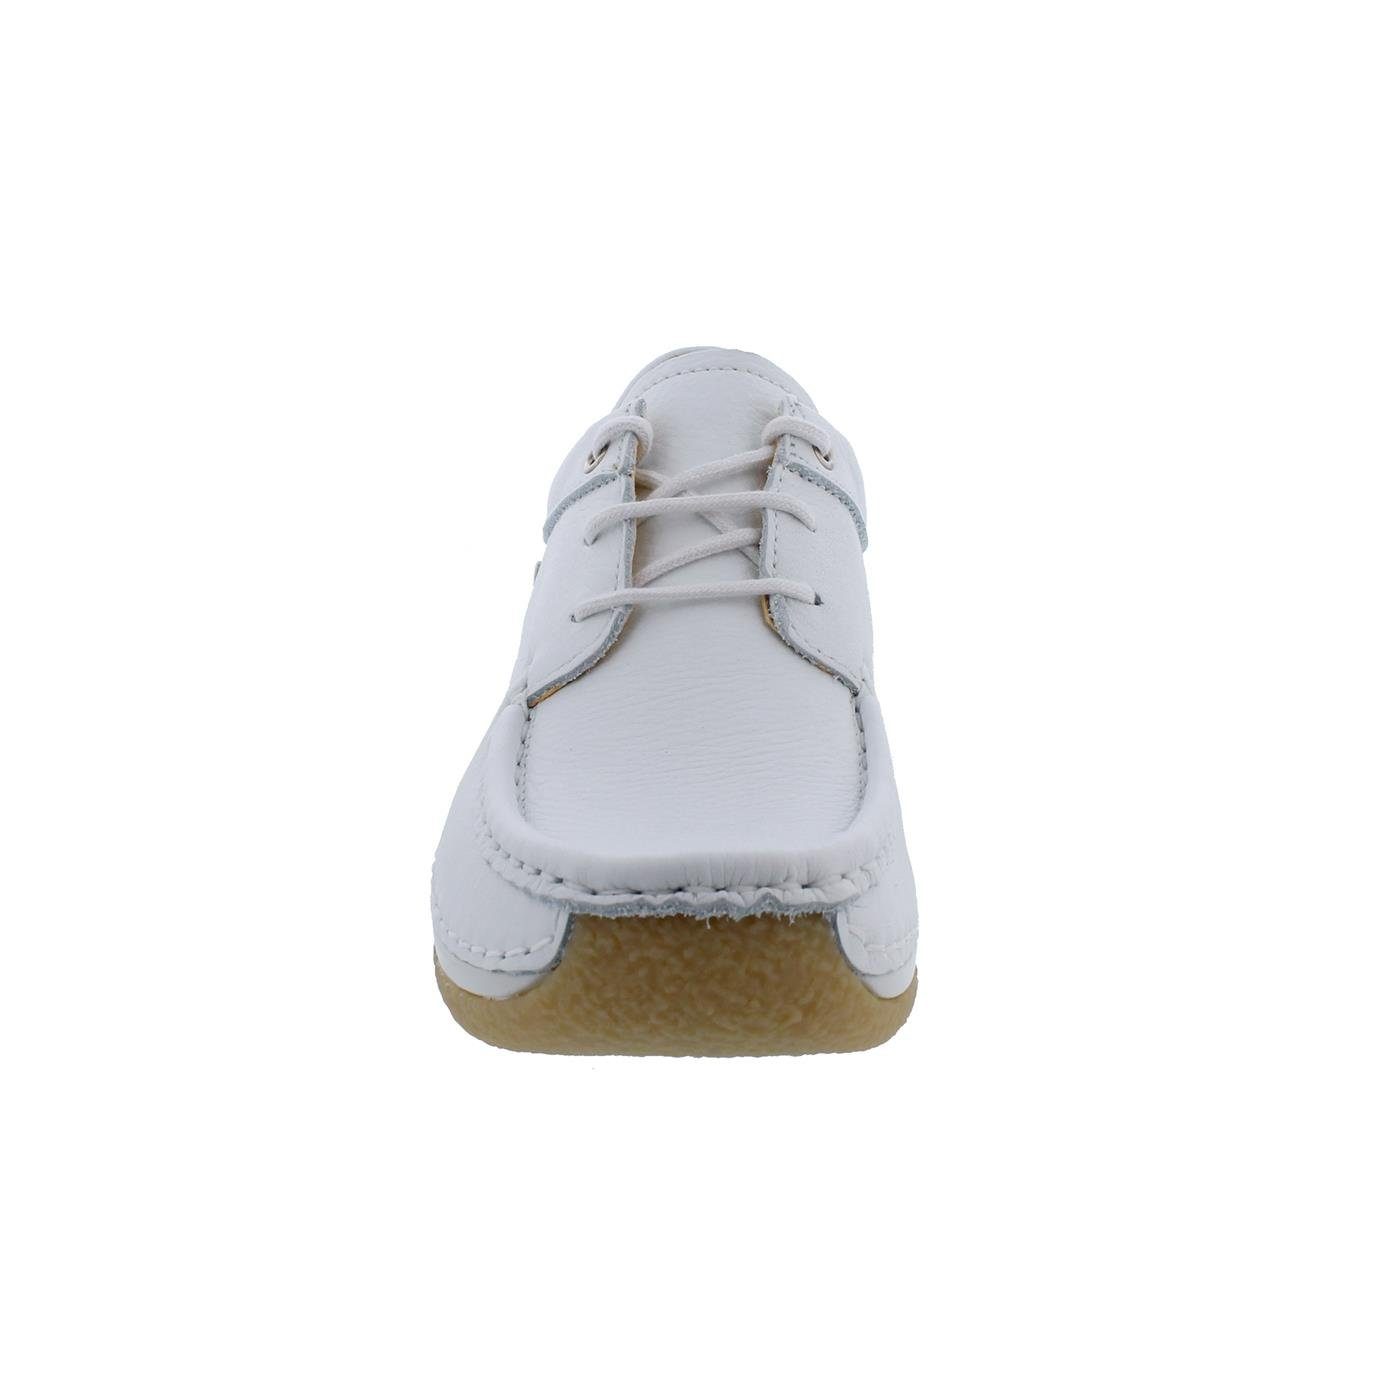 WOLKY Celebration Schnürschuh White, 0452520-100 Sneaker, Nappa leather